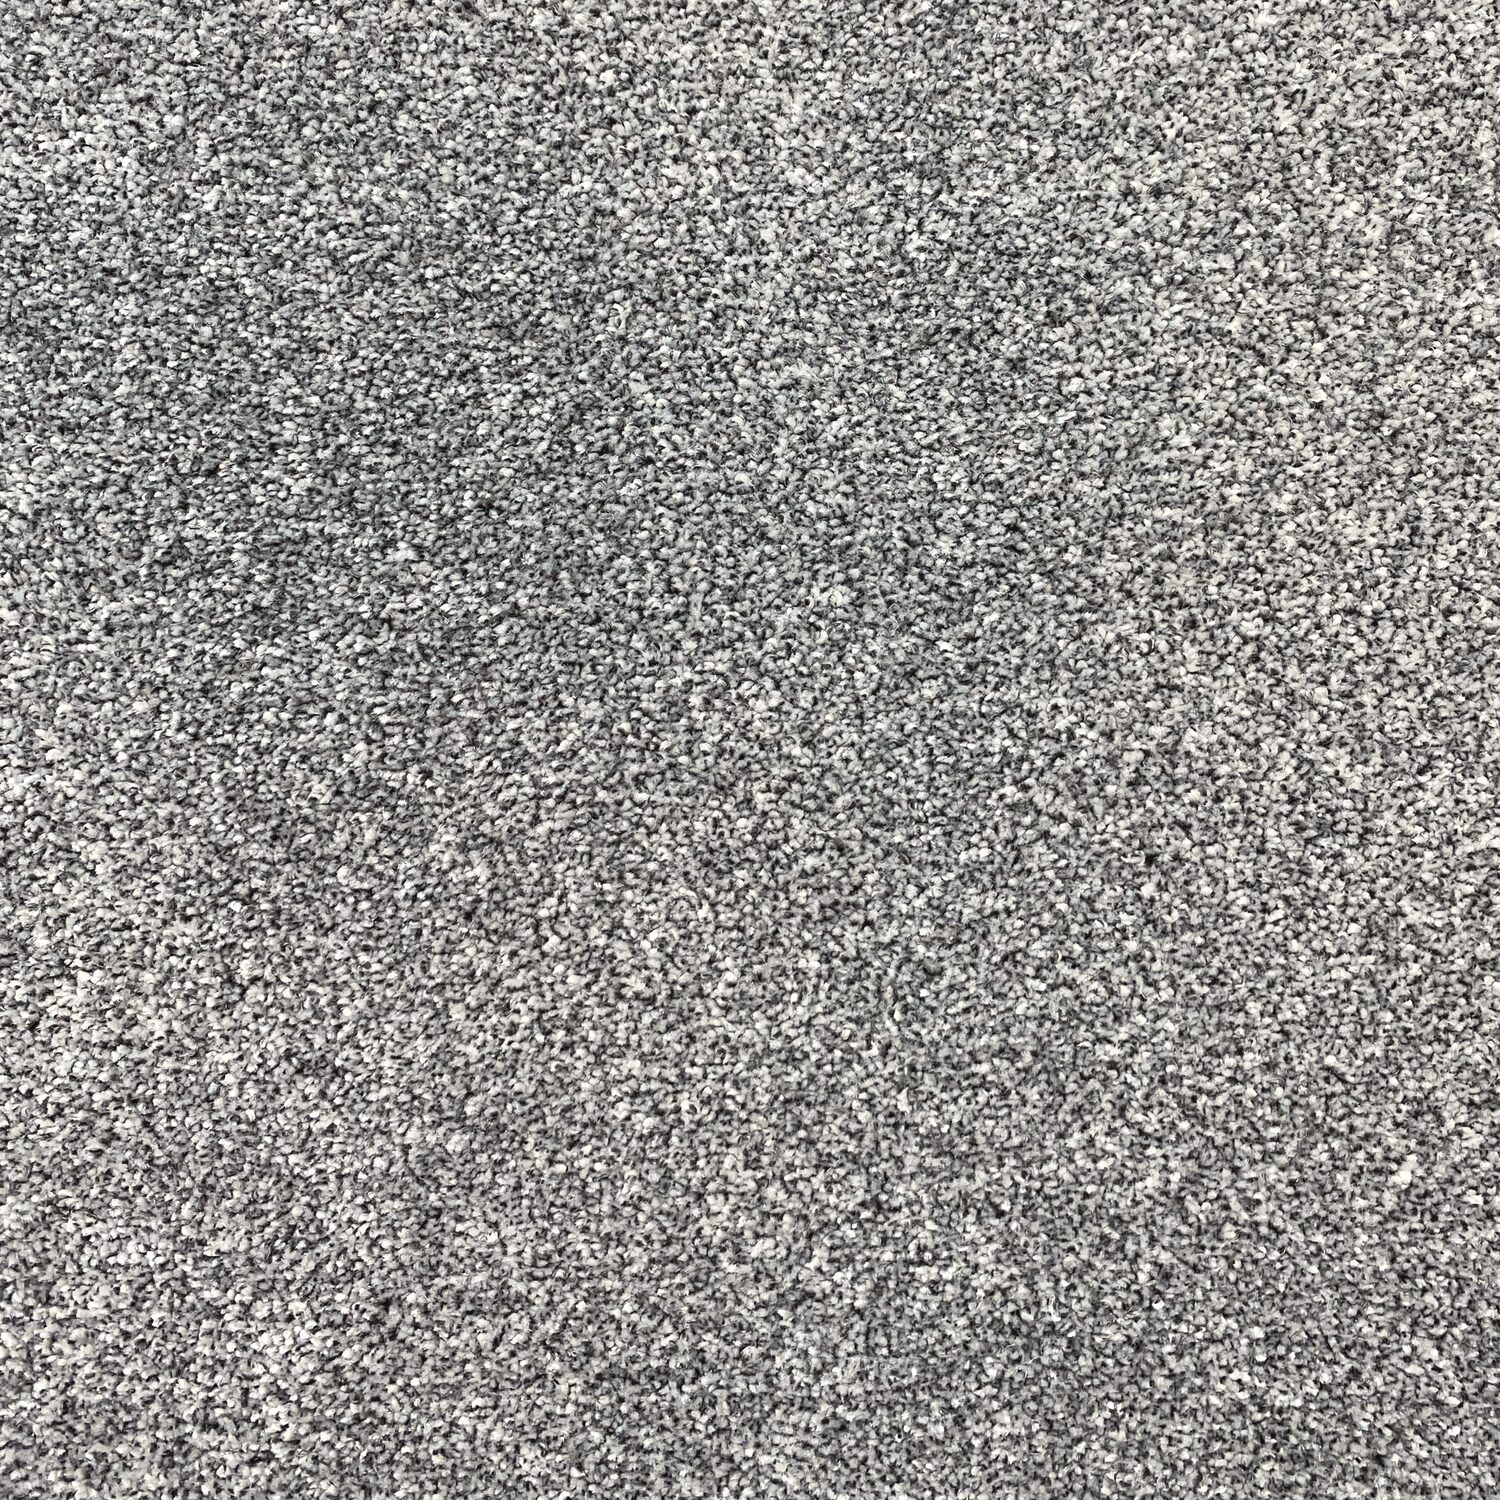 Carpet name: Smart Textures Dove